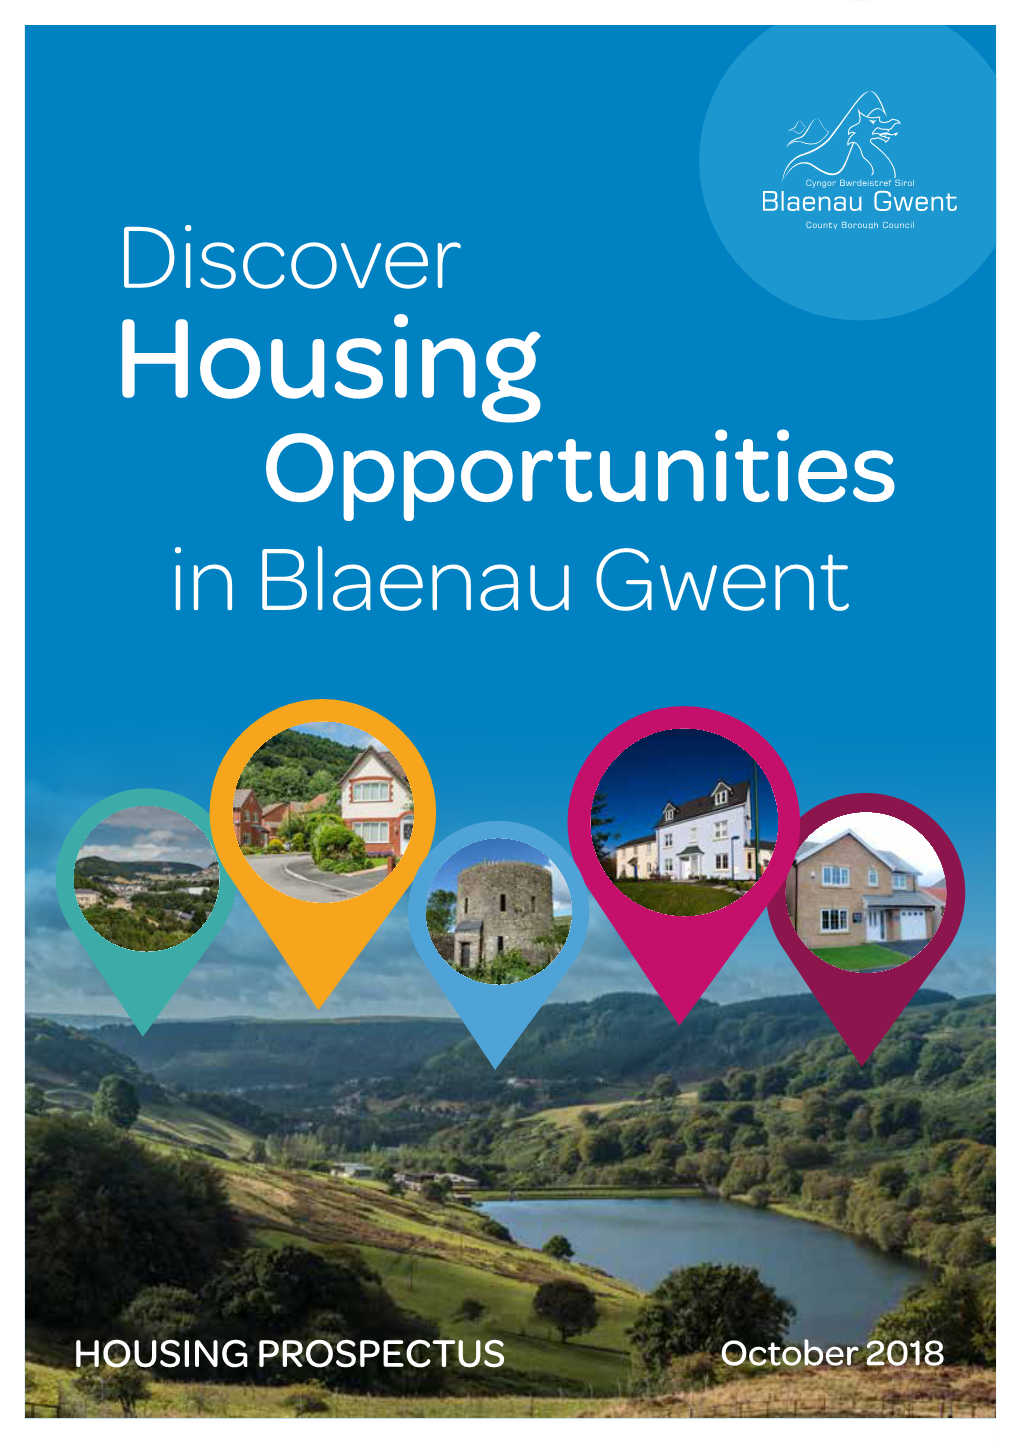 Opportunities in Blaenau Gwent